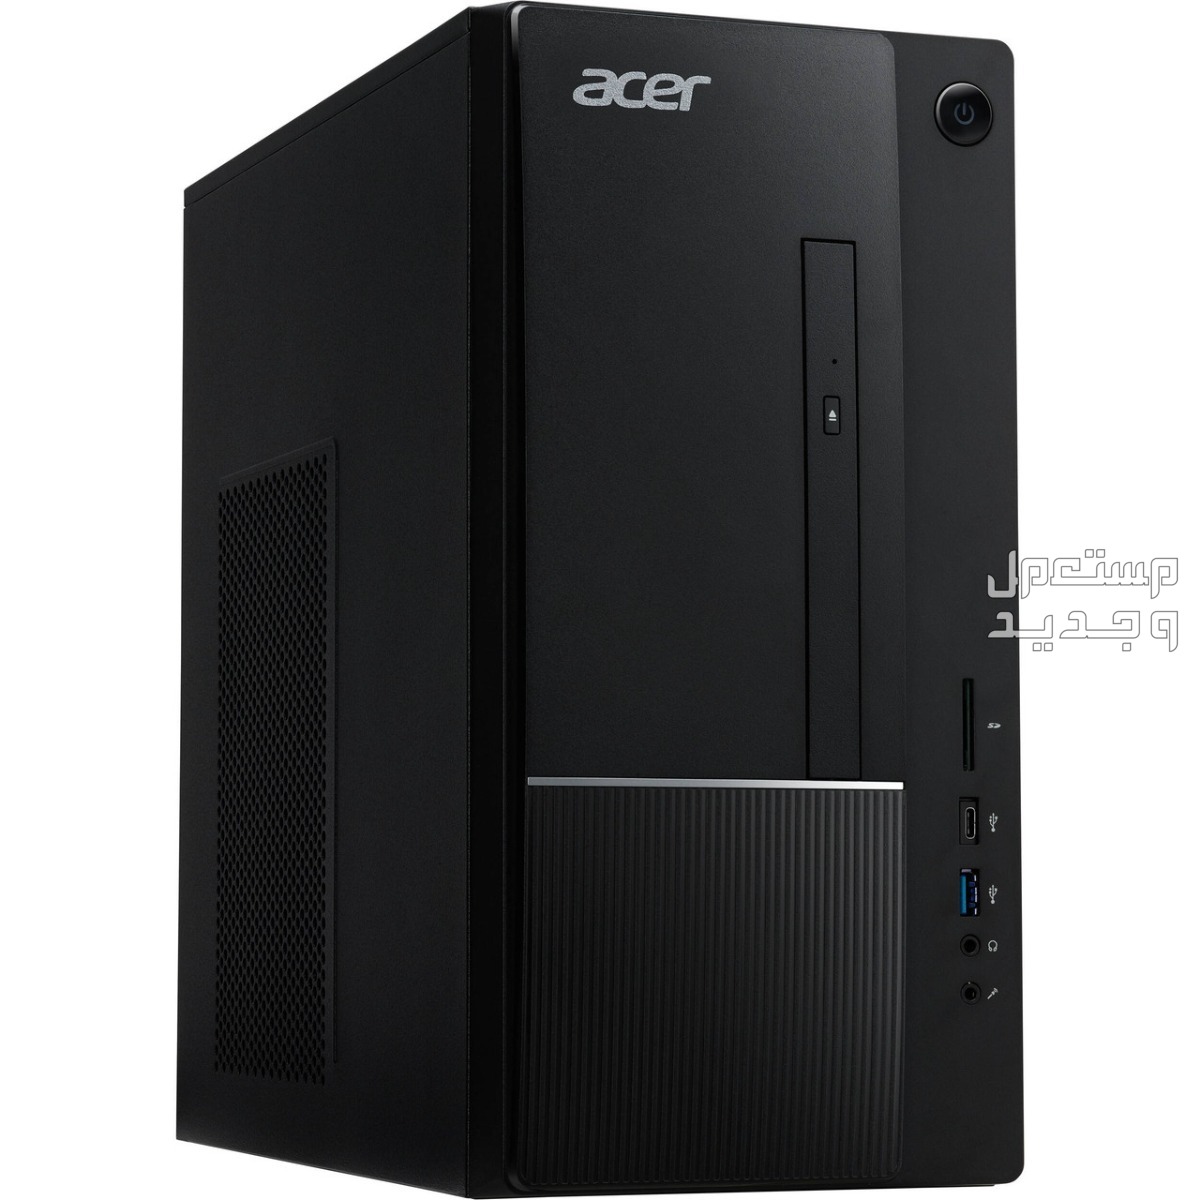 تعرف على جهاز كمبيوتر مكتبي Acer Aspire TC-885-UA91 في فلسطين Acer Aspire TC-885-UA91